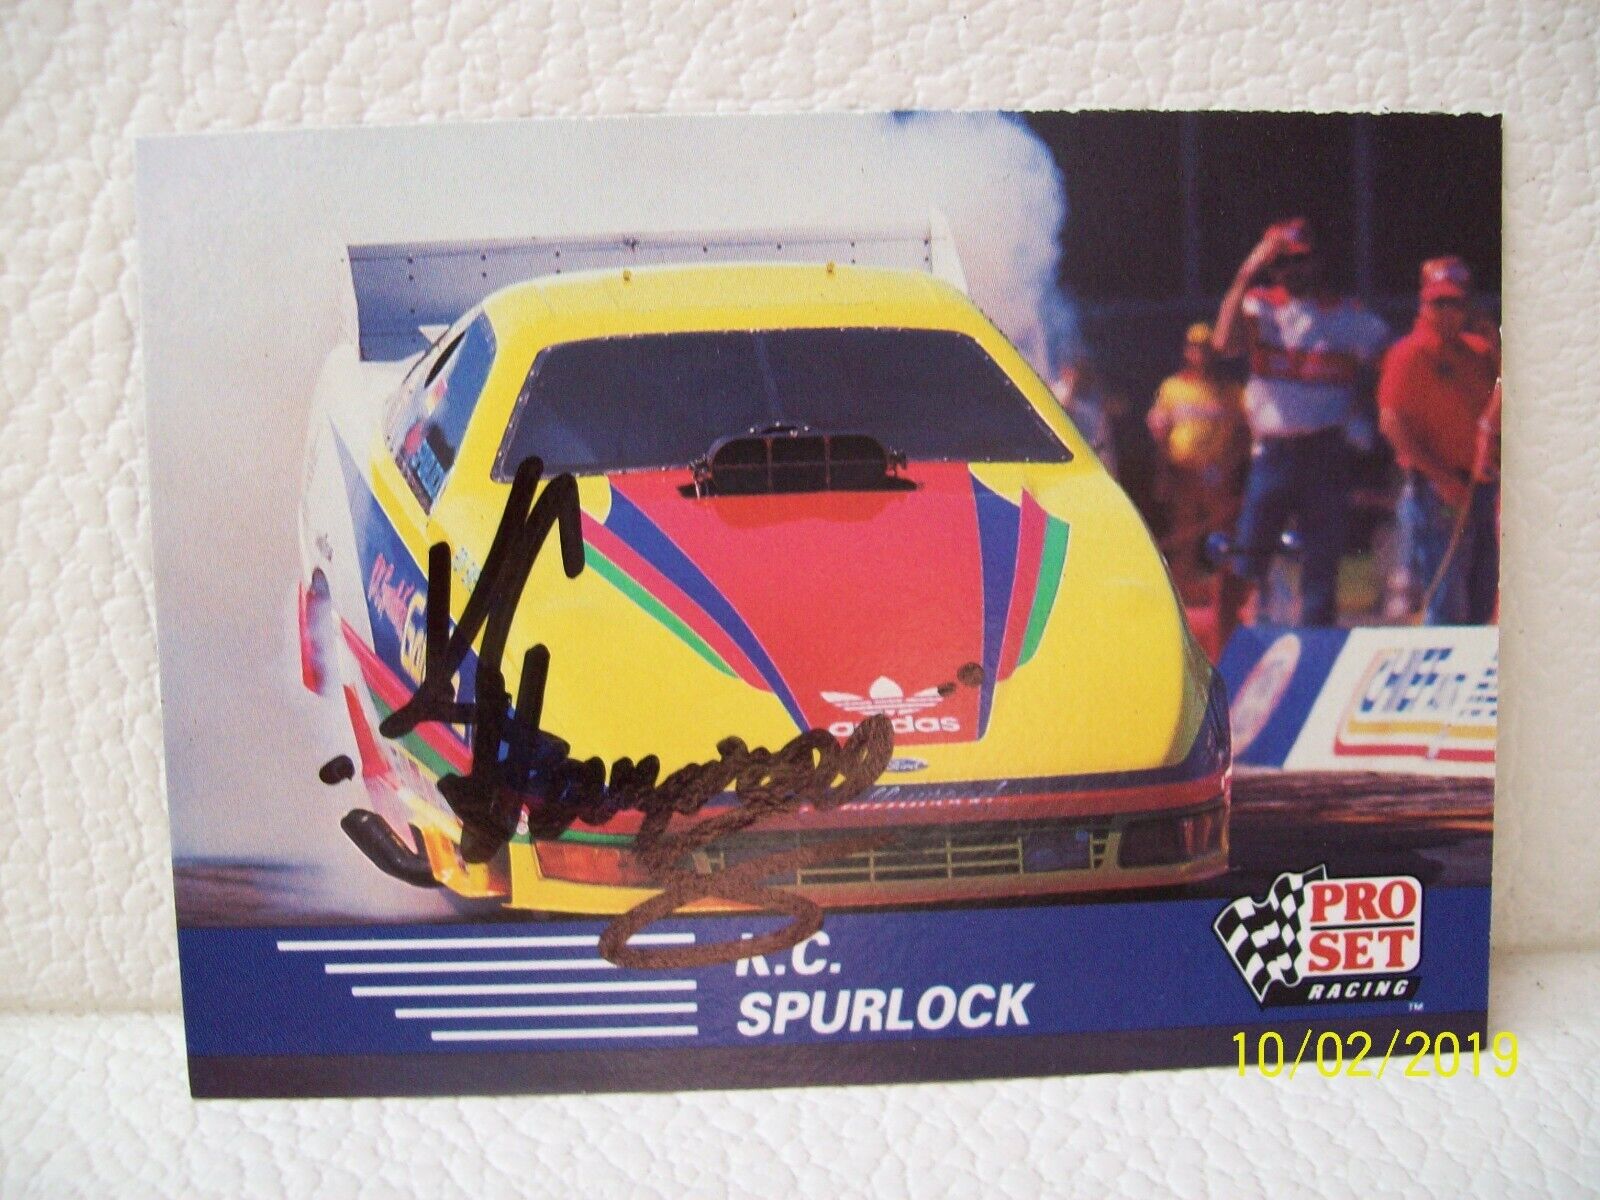 Kc Spurlock Autographed 1991 Pro Set Racing Nhra Funny Car Trading Card Signed